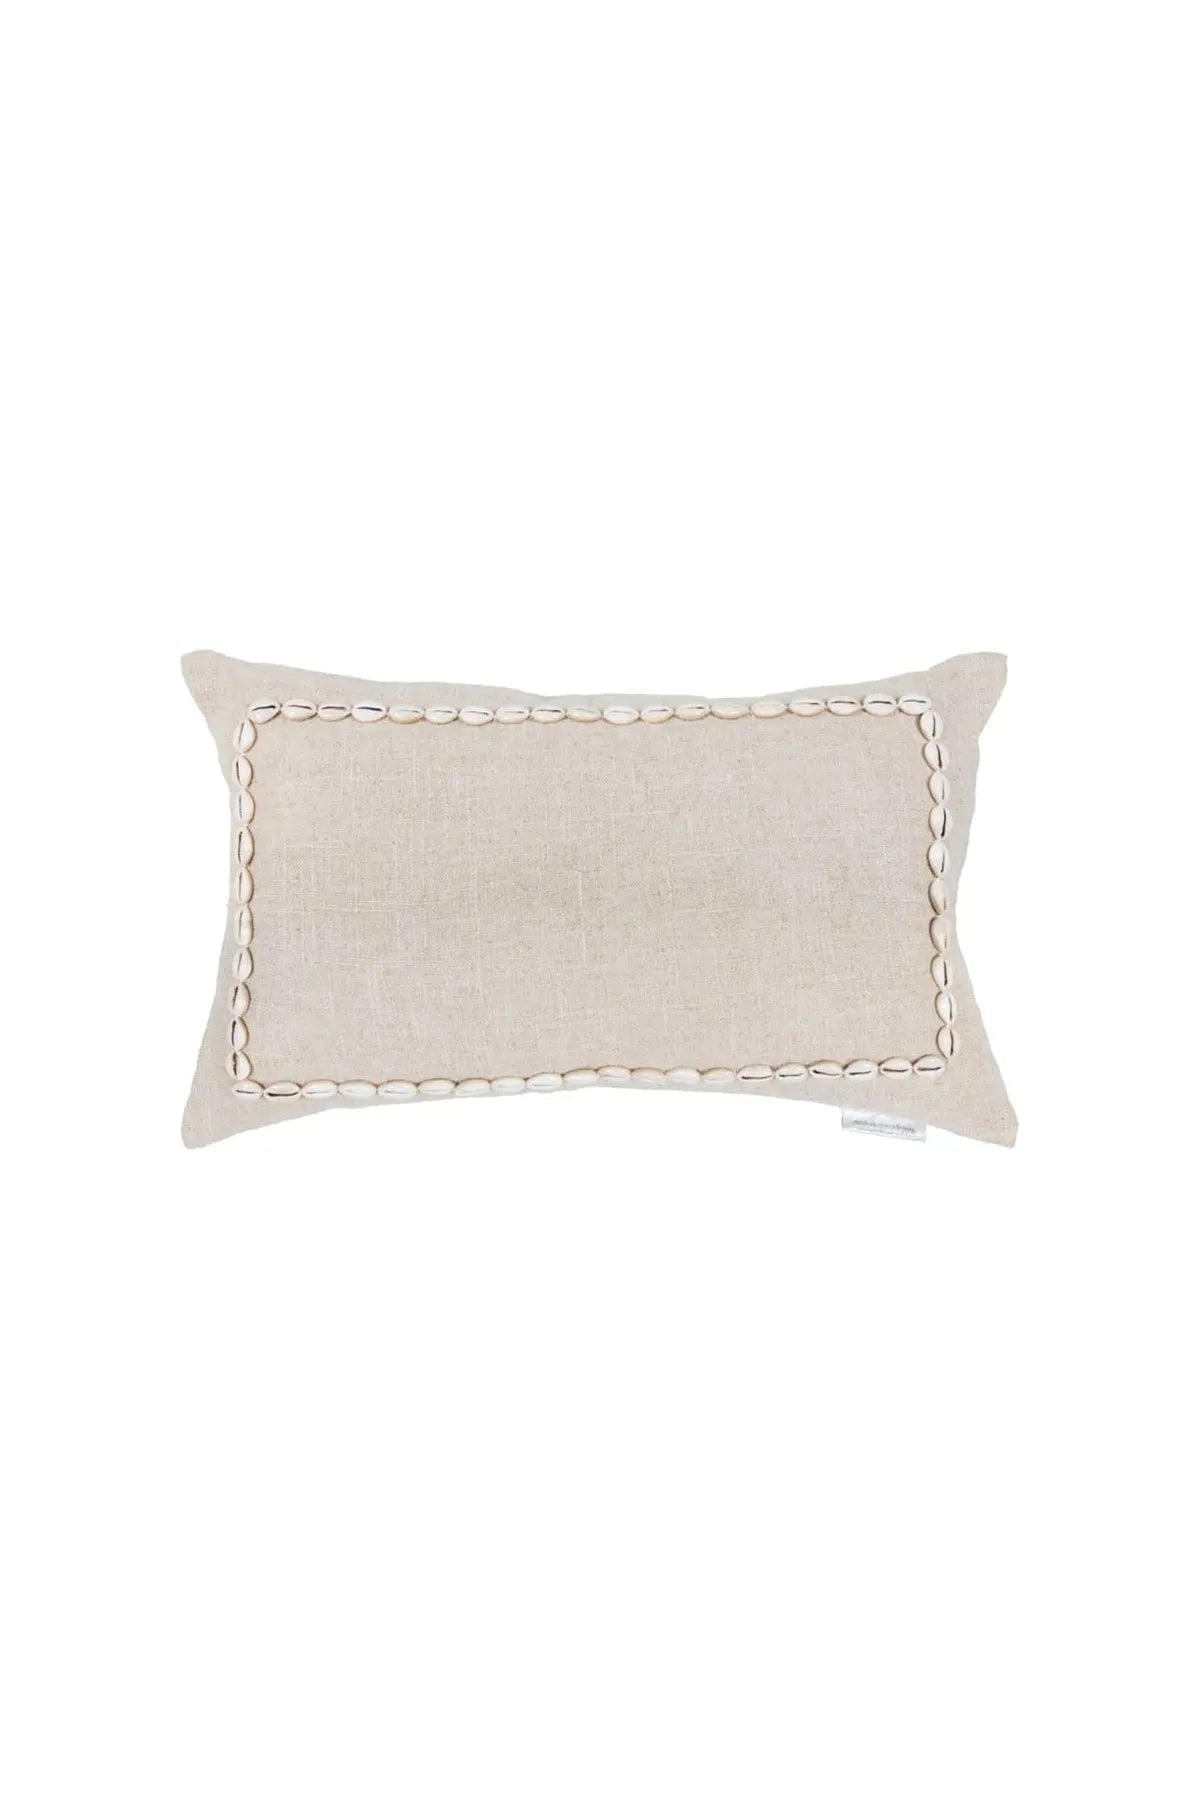 Cowrie shell linen cushion - long